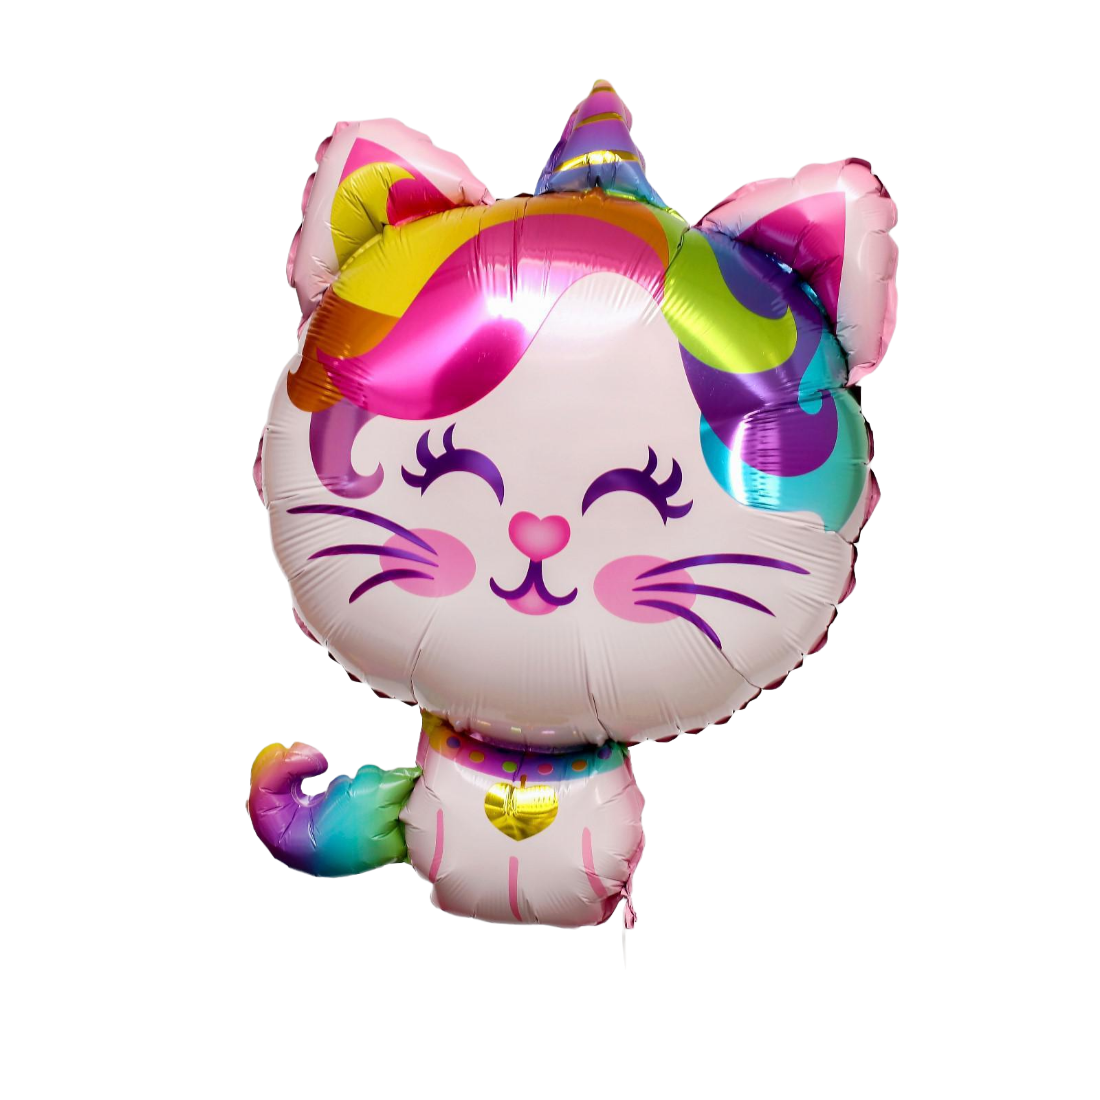 Шарик кошечка. Фигура фольга шар кошка Единорог. Кошка Единорожка шар фольга. Кошка Единорожка воздушный шар. Шар фольга Китти Единорожка розовая.